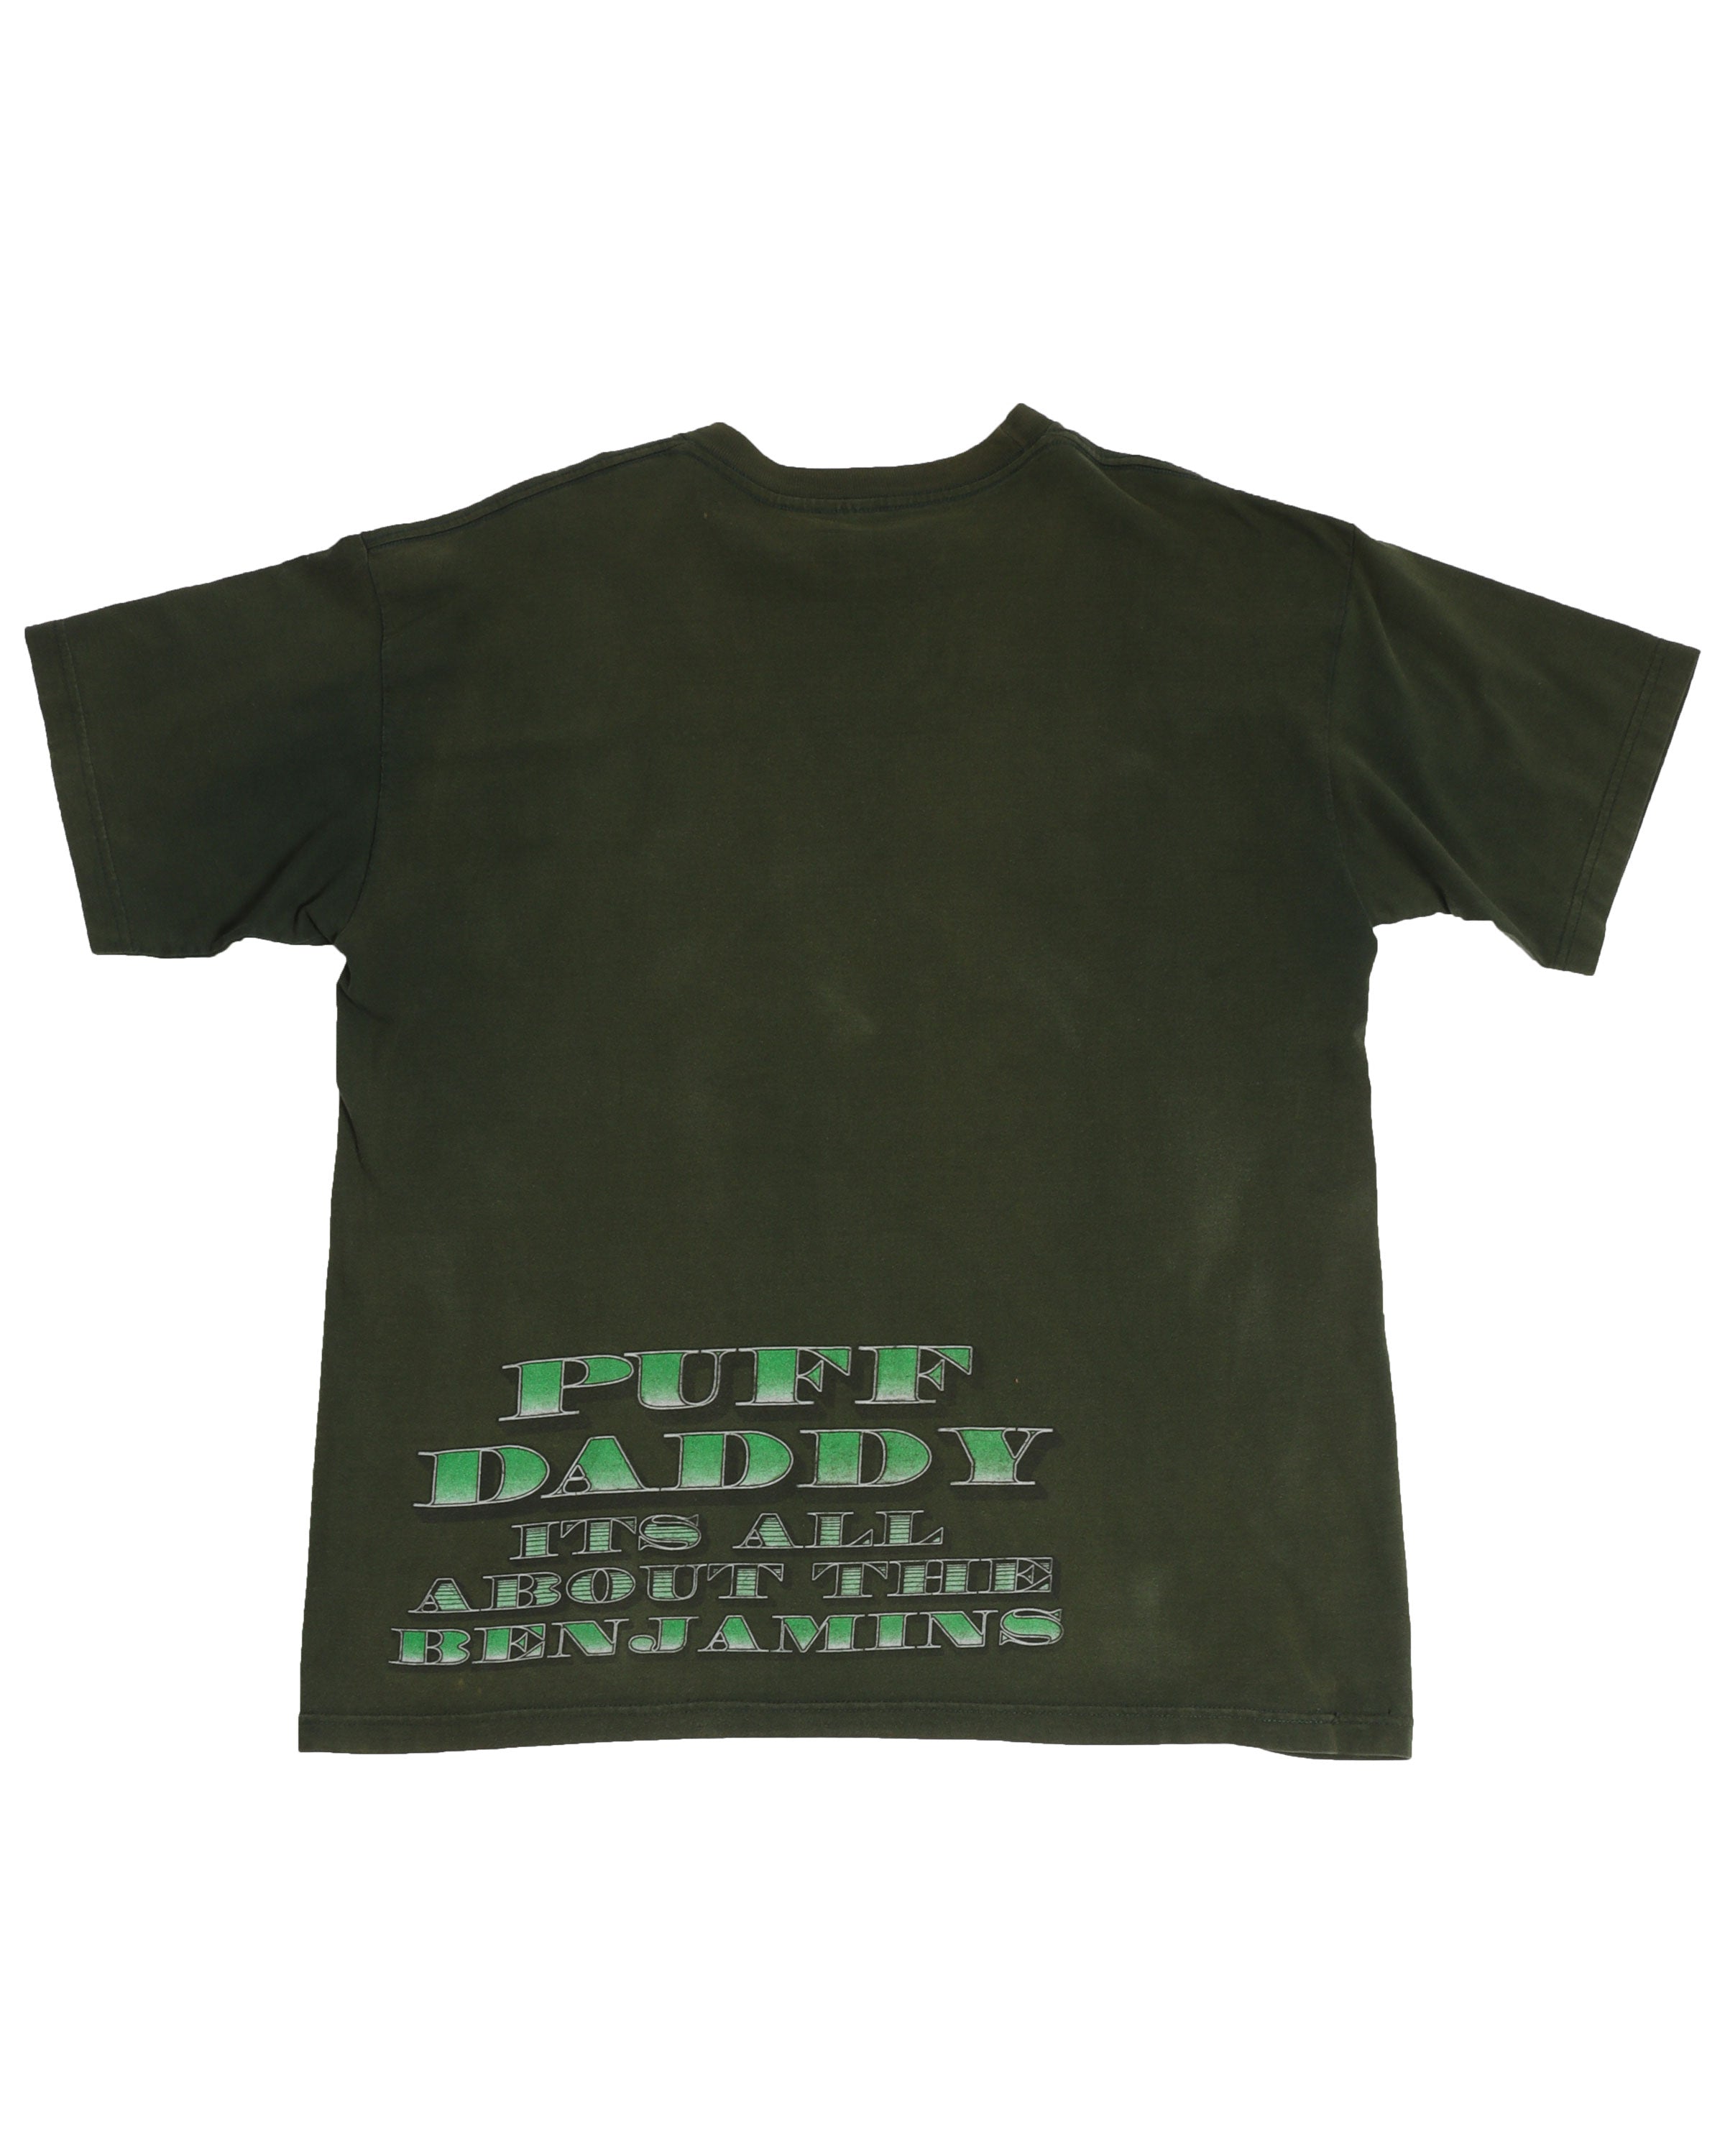 Puff Daddy $100 Bill T-shirt